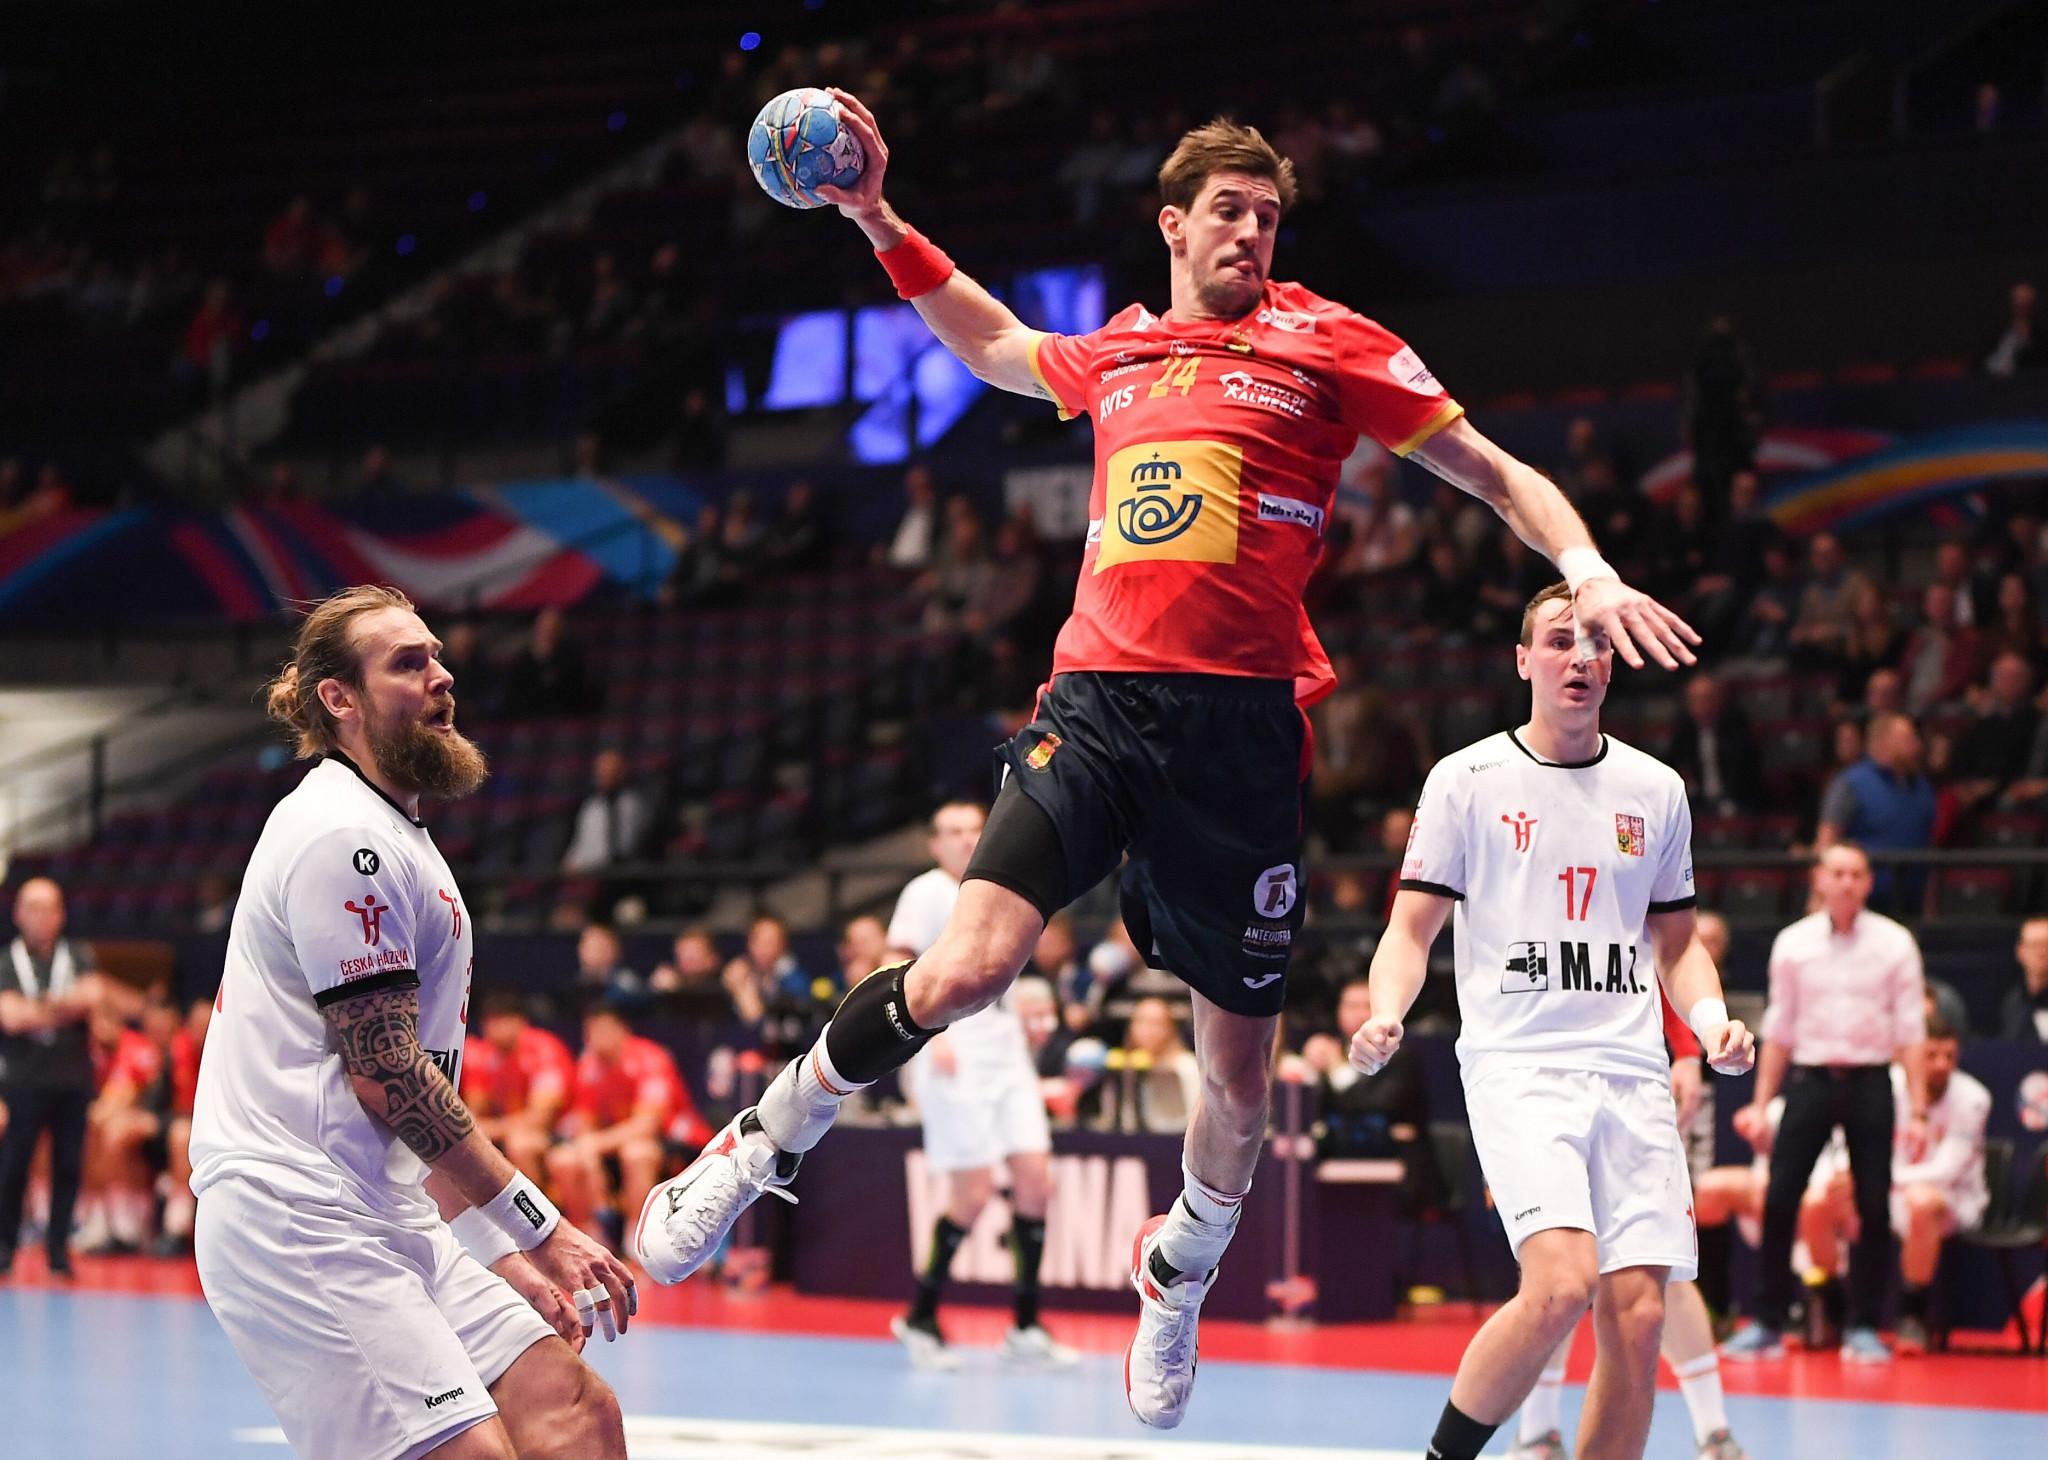 Spain looking good in defence of EHF European Men’s Handball Championship